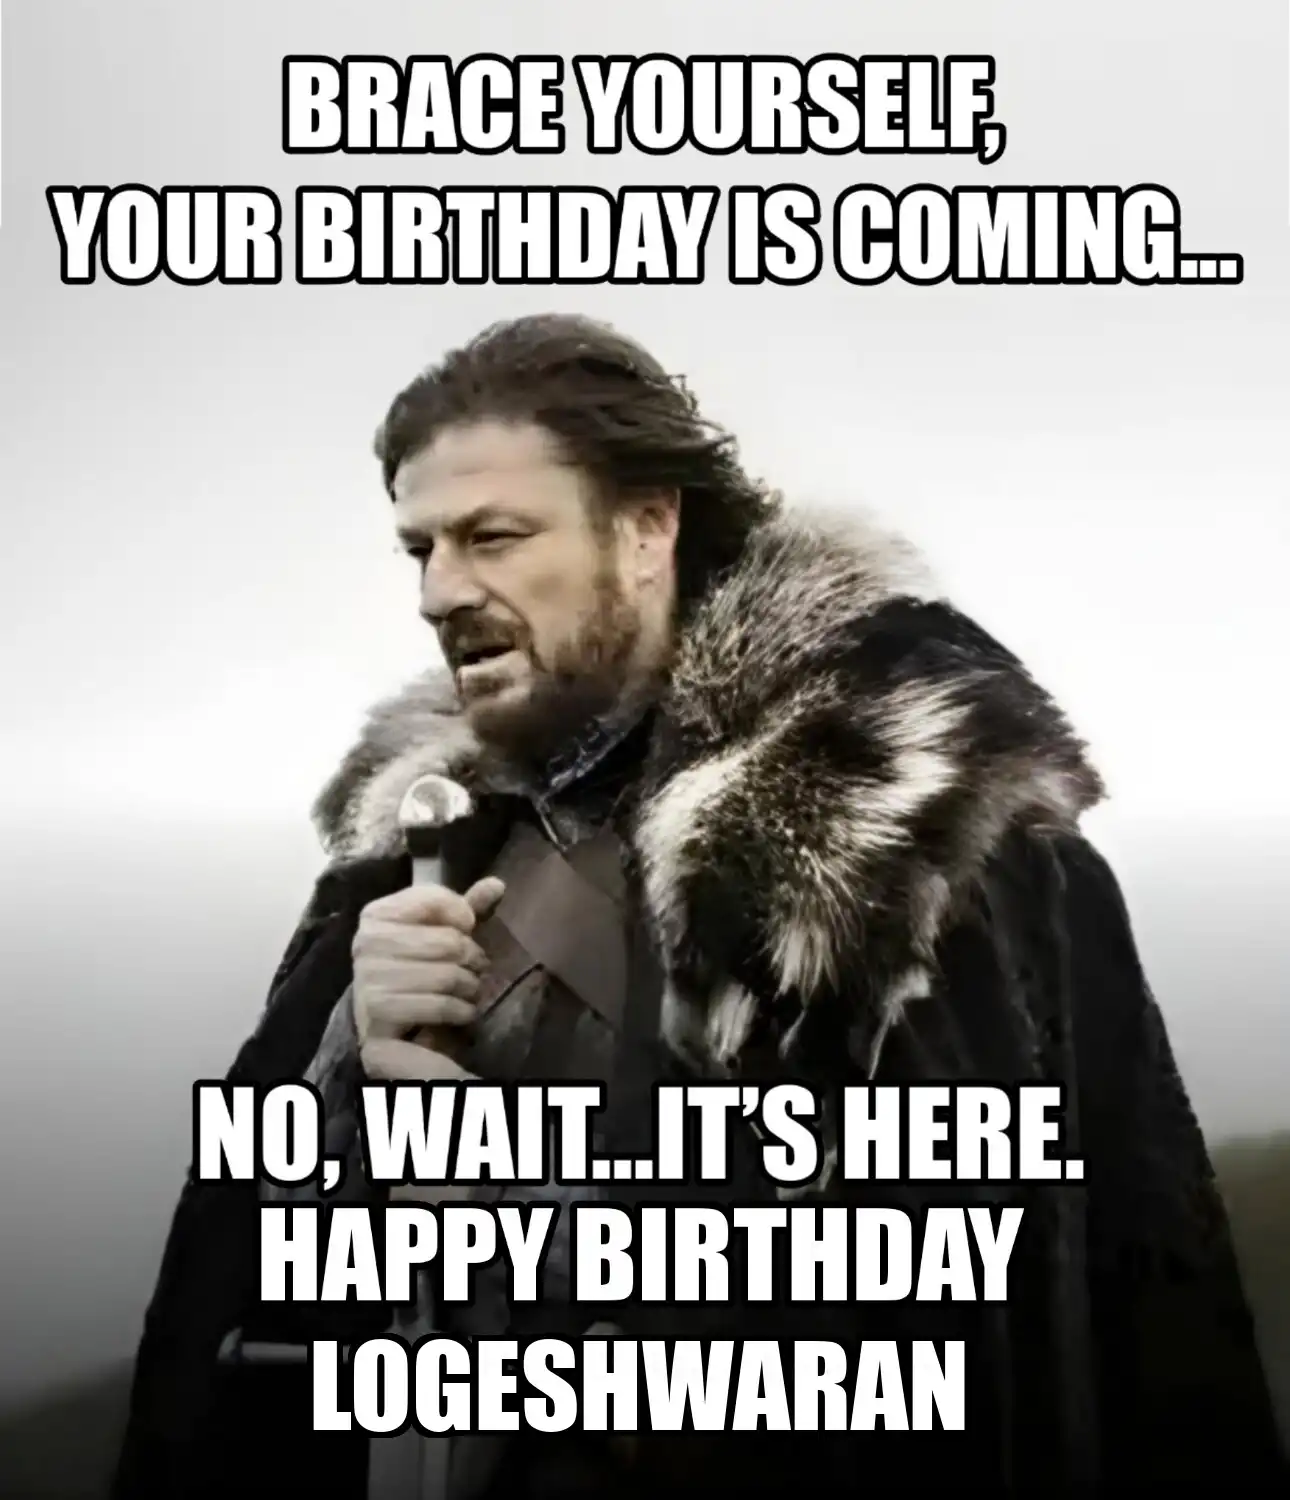 Happy Birthday Logeshwaran Brace Yourself Your Birthday Is Coming Meme